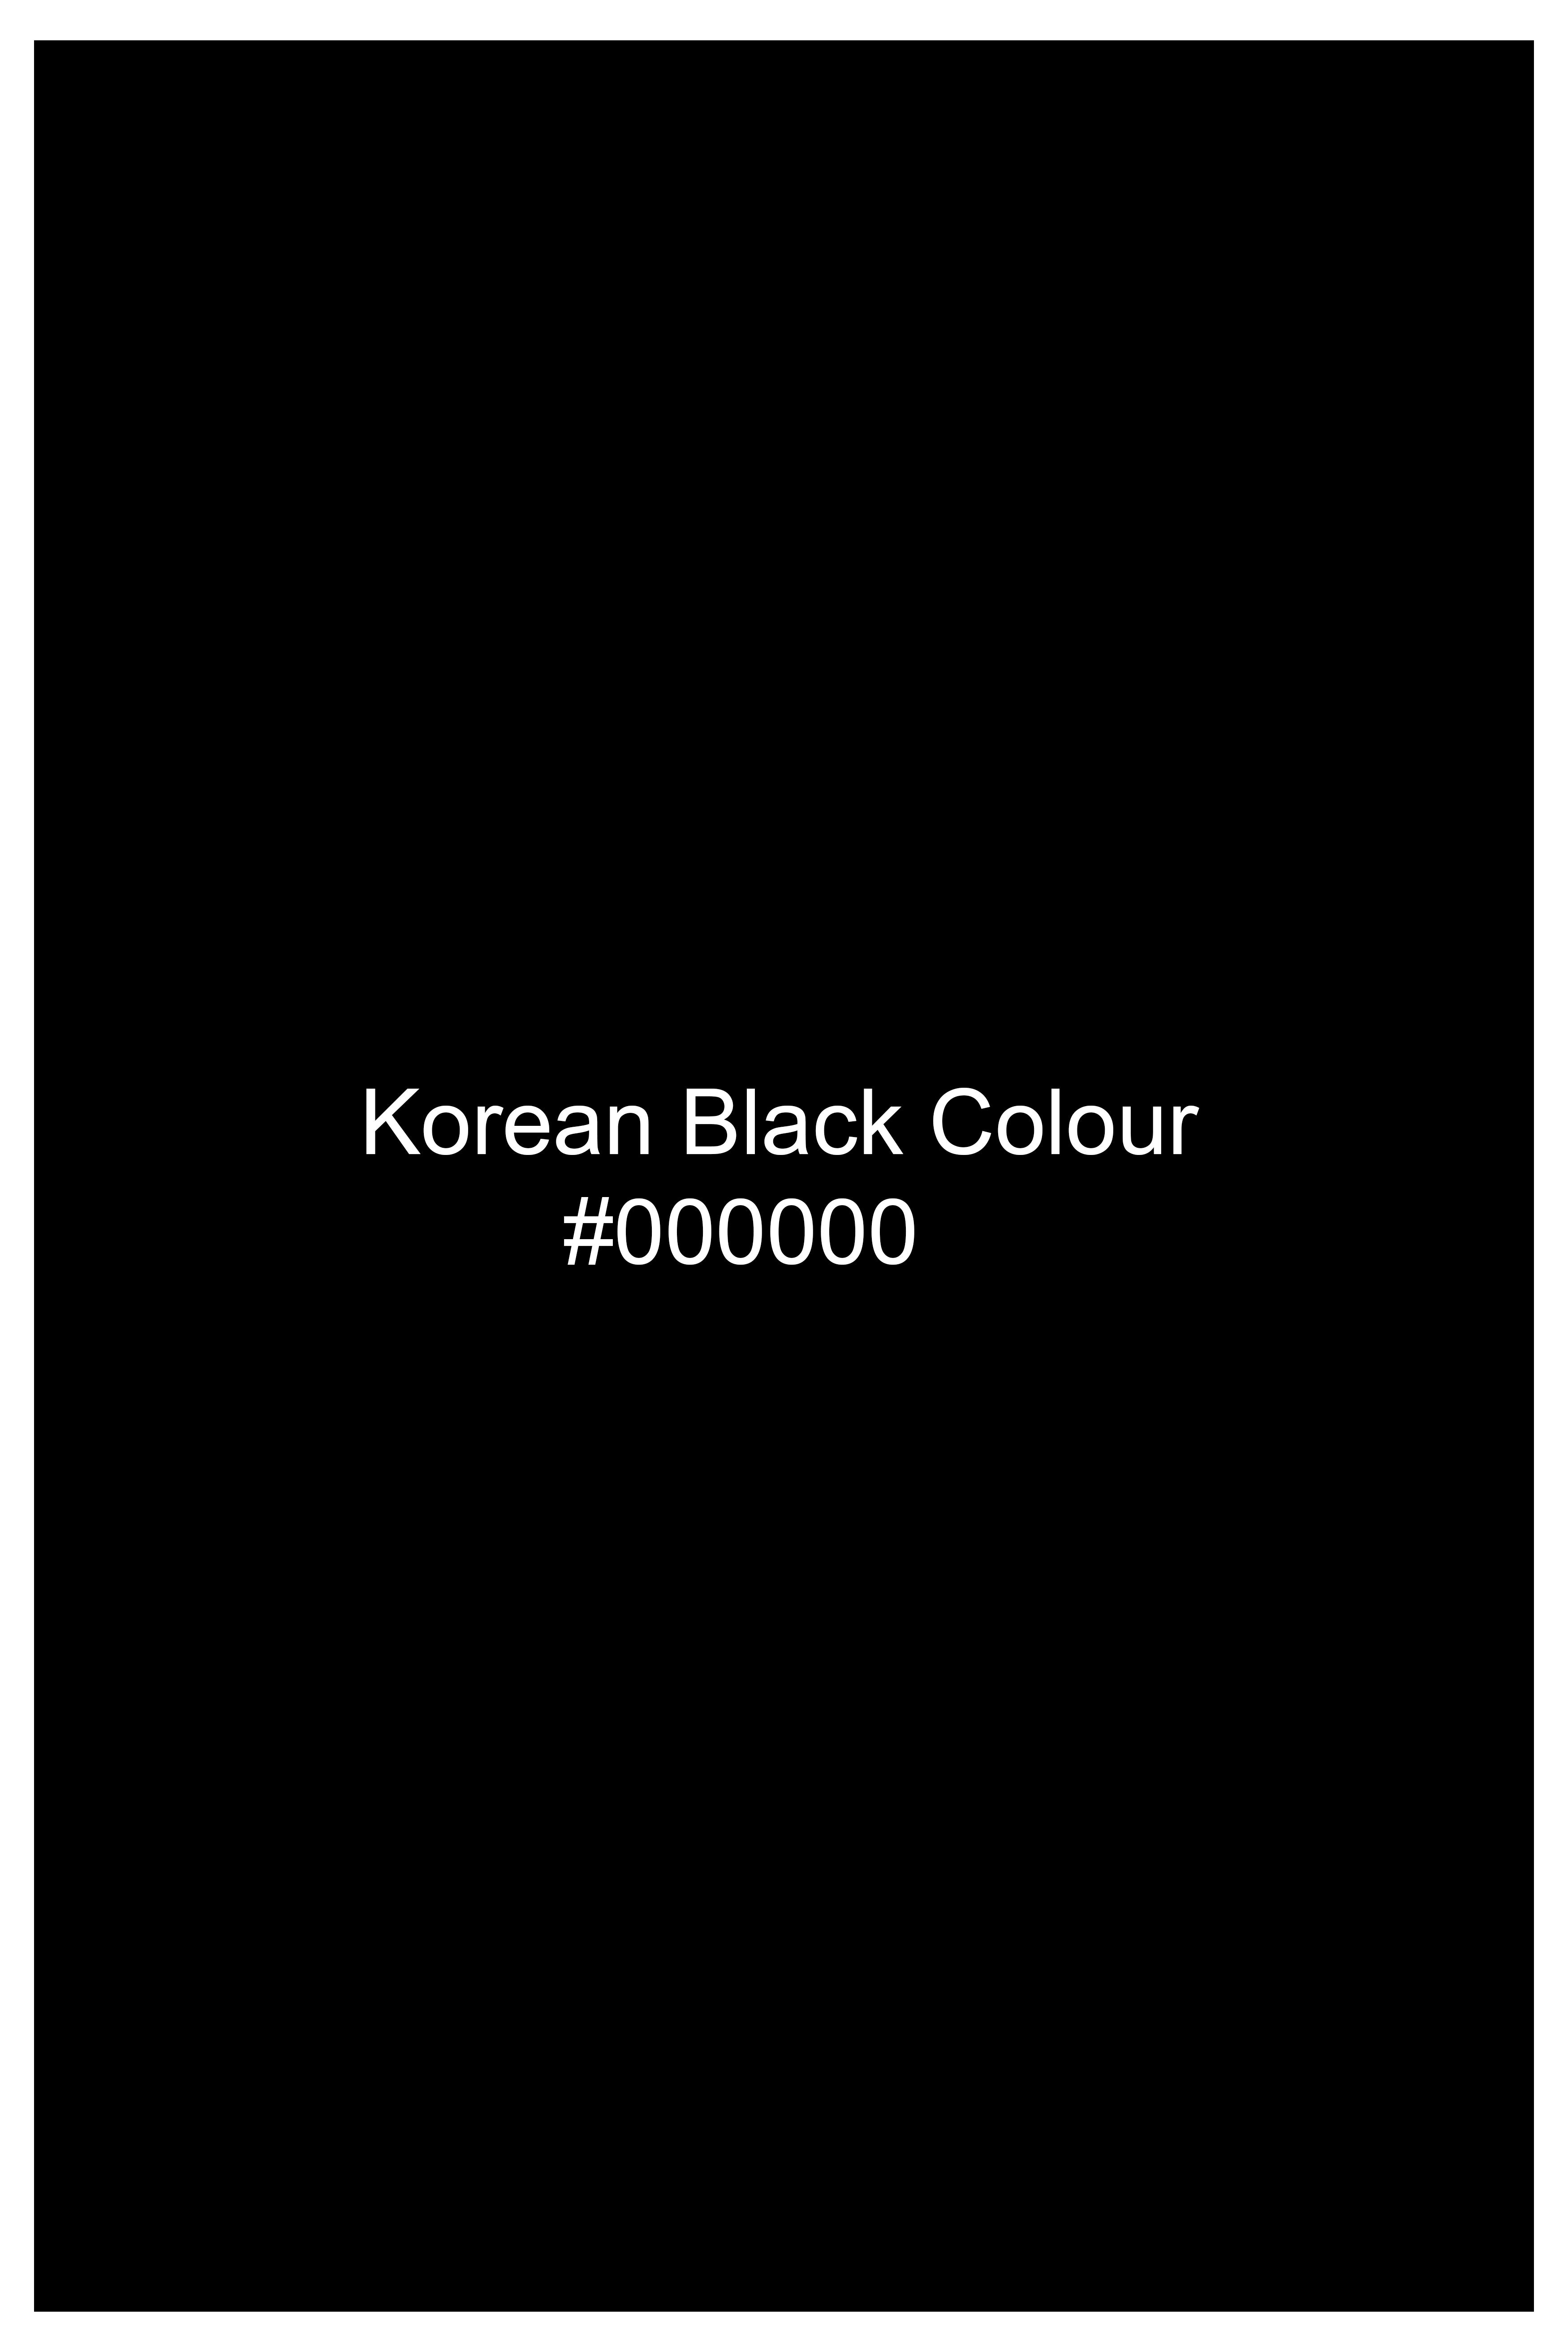 Korean Black (The Best Black We Have) Floral Embroidered Wool Rich Designer Tuxedo Suit ST3274-SBP-BKPL-FB-E349-36, ST3274-SBP-BKPL-FB-E349-38, ST3274-SBP-BKPL-FB-E349-40, ST3274-SBP-BKPL-FB-E349-42, ST3274-SBP-BKPL-FB-E349-44, ST3274-SBP-BKPL-FB-E349-46, ST3274-SBP-BKPL-FB-E349-48, ST3274-SBP-BKPL-FB-E349-50, ST3274-SBP-BKPL-FB-E349-52, ST3274-SBP-BKPL-FB-E349-54, ST3274-SBP-BKPL-FB-E349-56, ST3274-SBP-BKPL-FB-E349-58, ST3274-SBP-BKPL-FB-E349-60